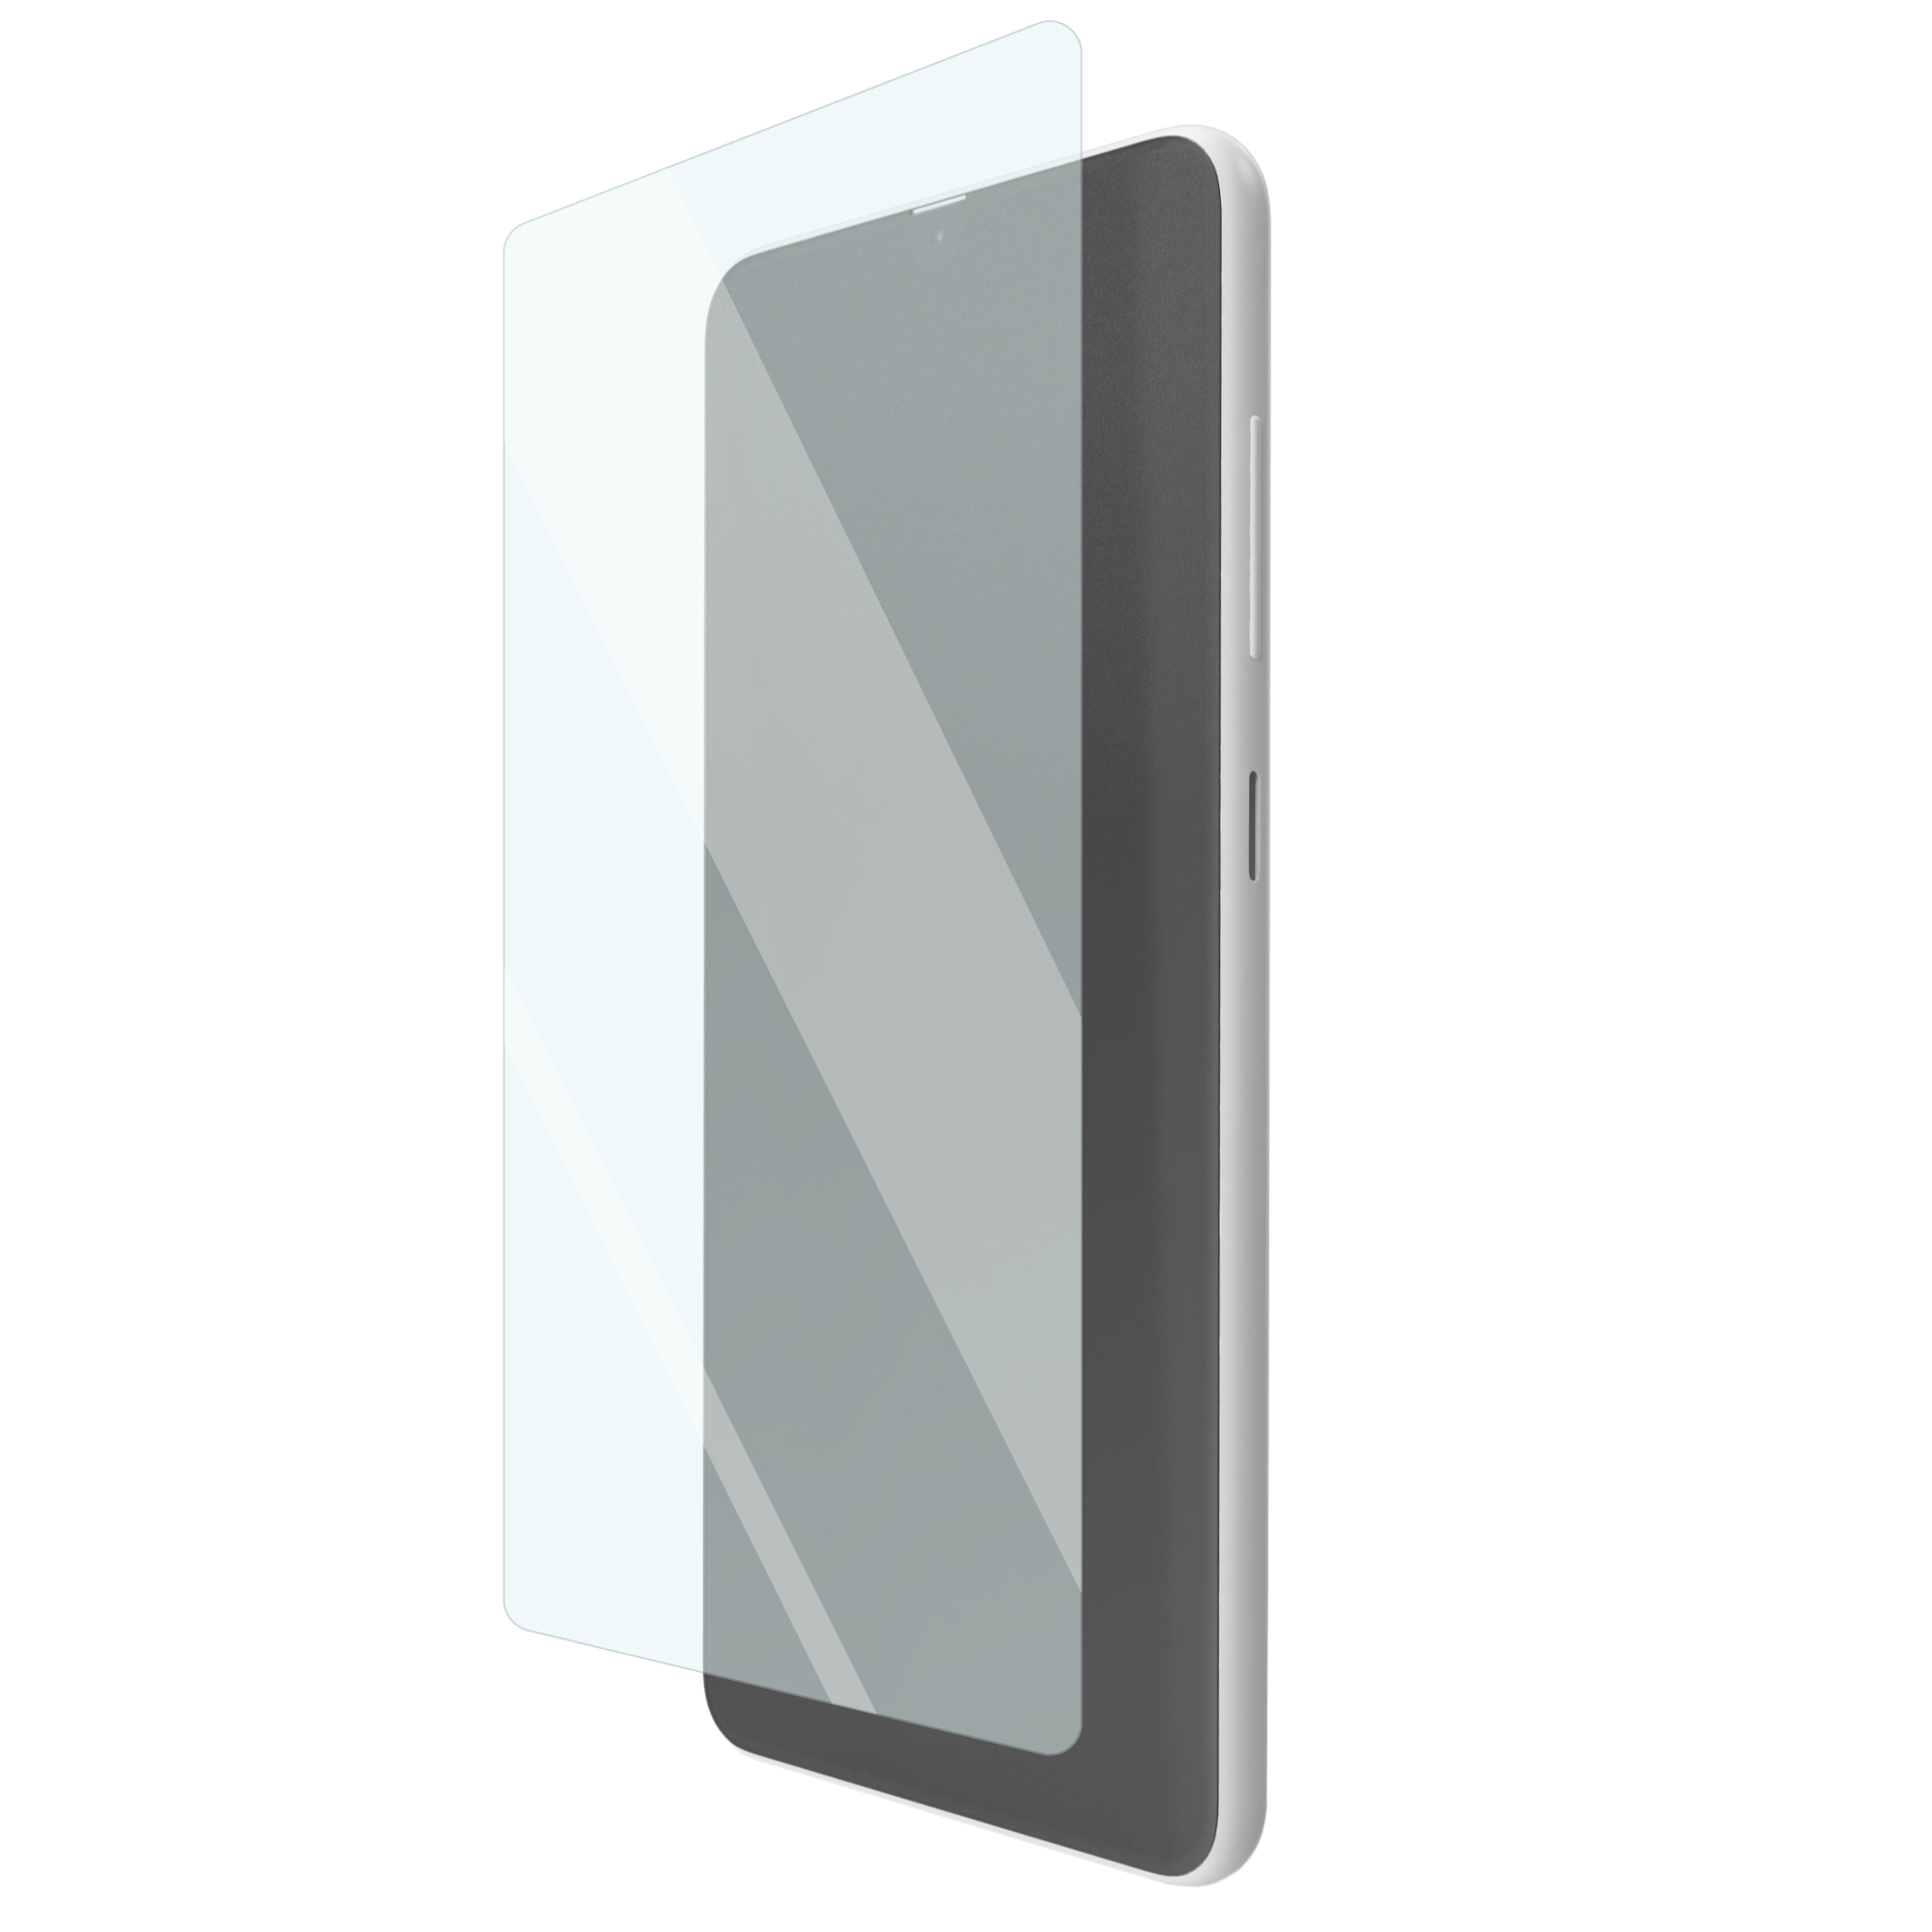 Folie de protectie silicon ShieldUP HiTech Regenerable pentru Motorola Moto E5 Play thumb